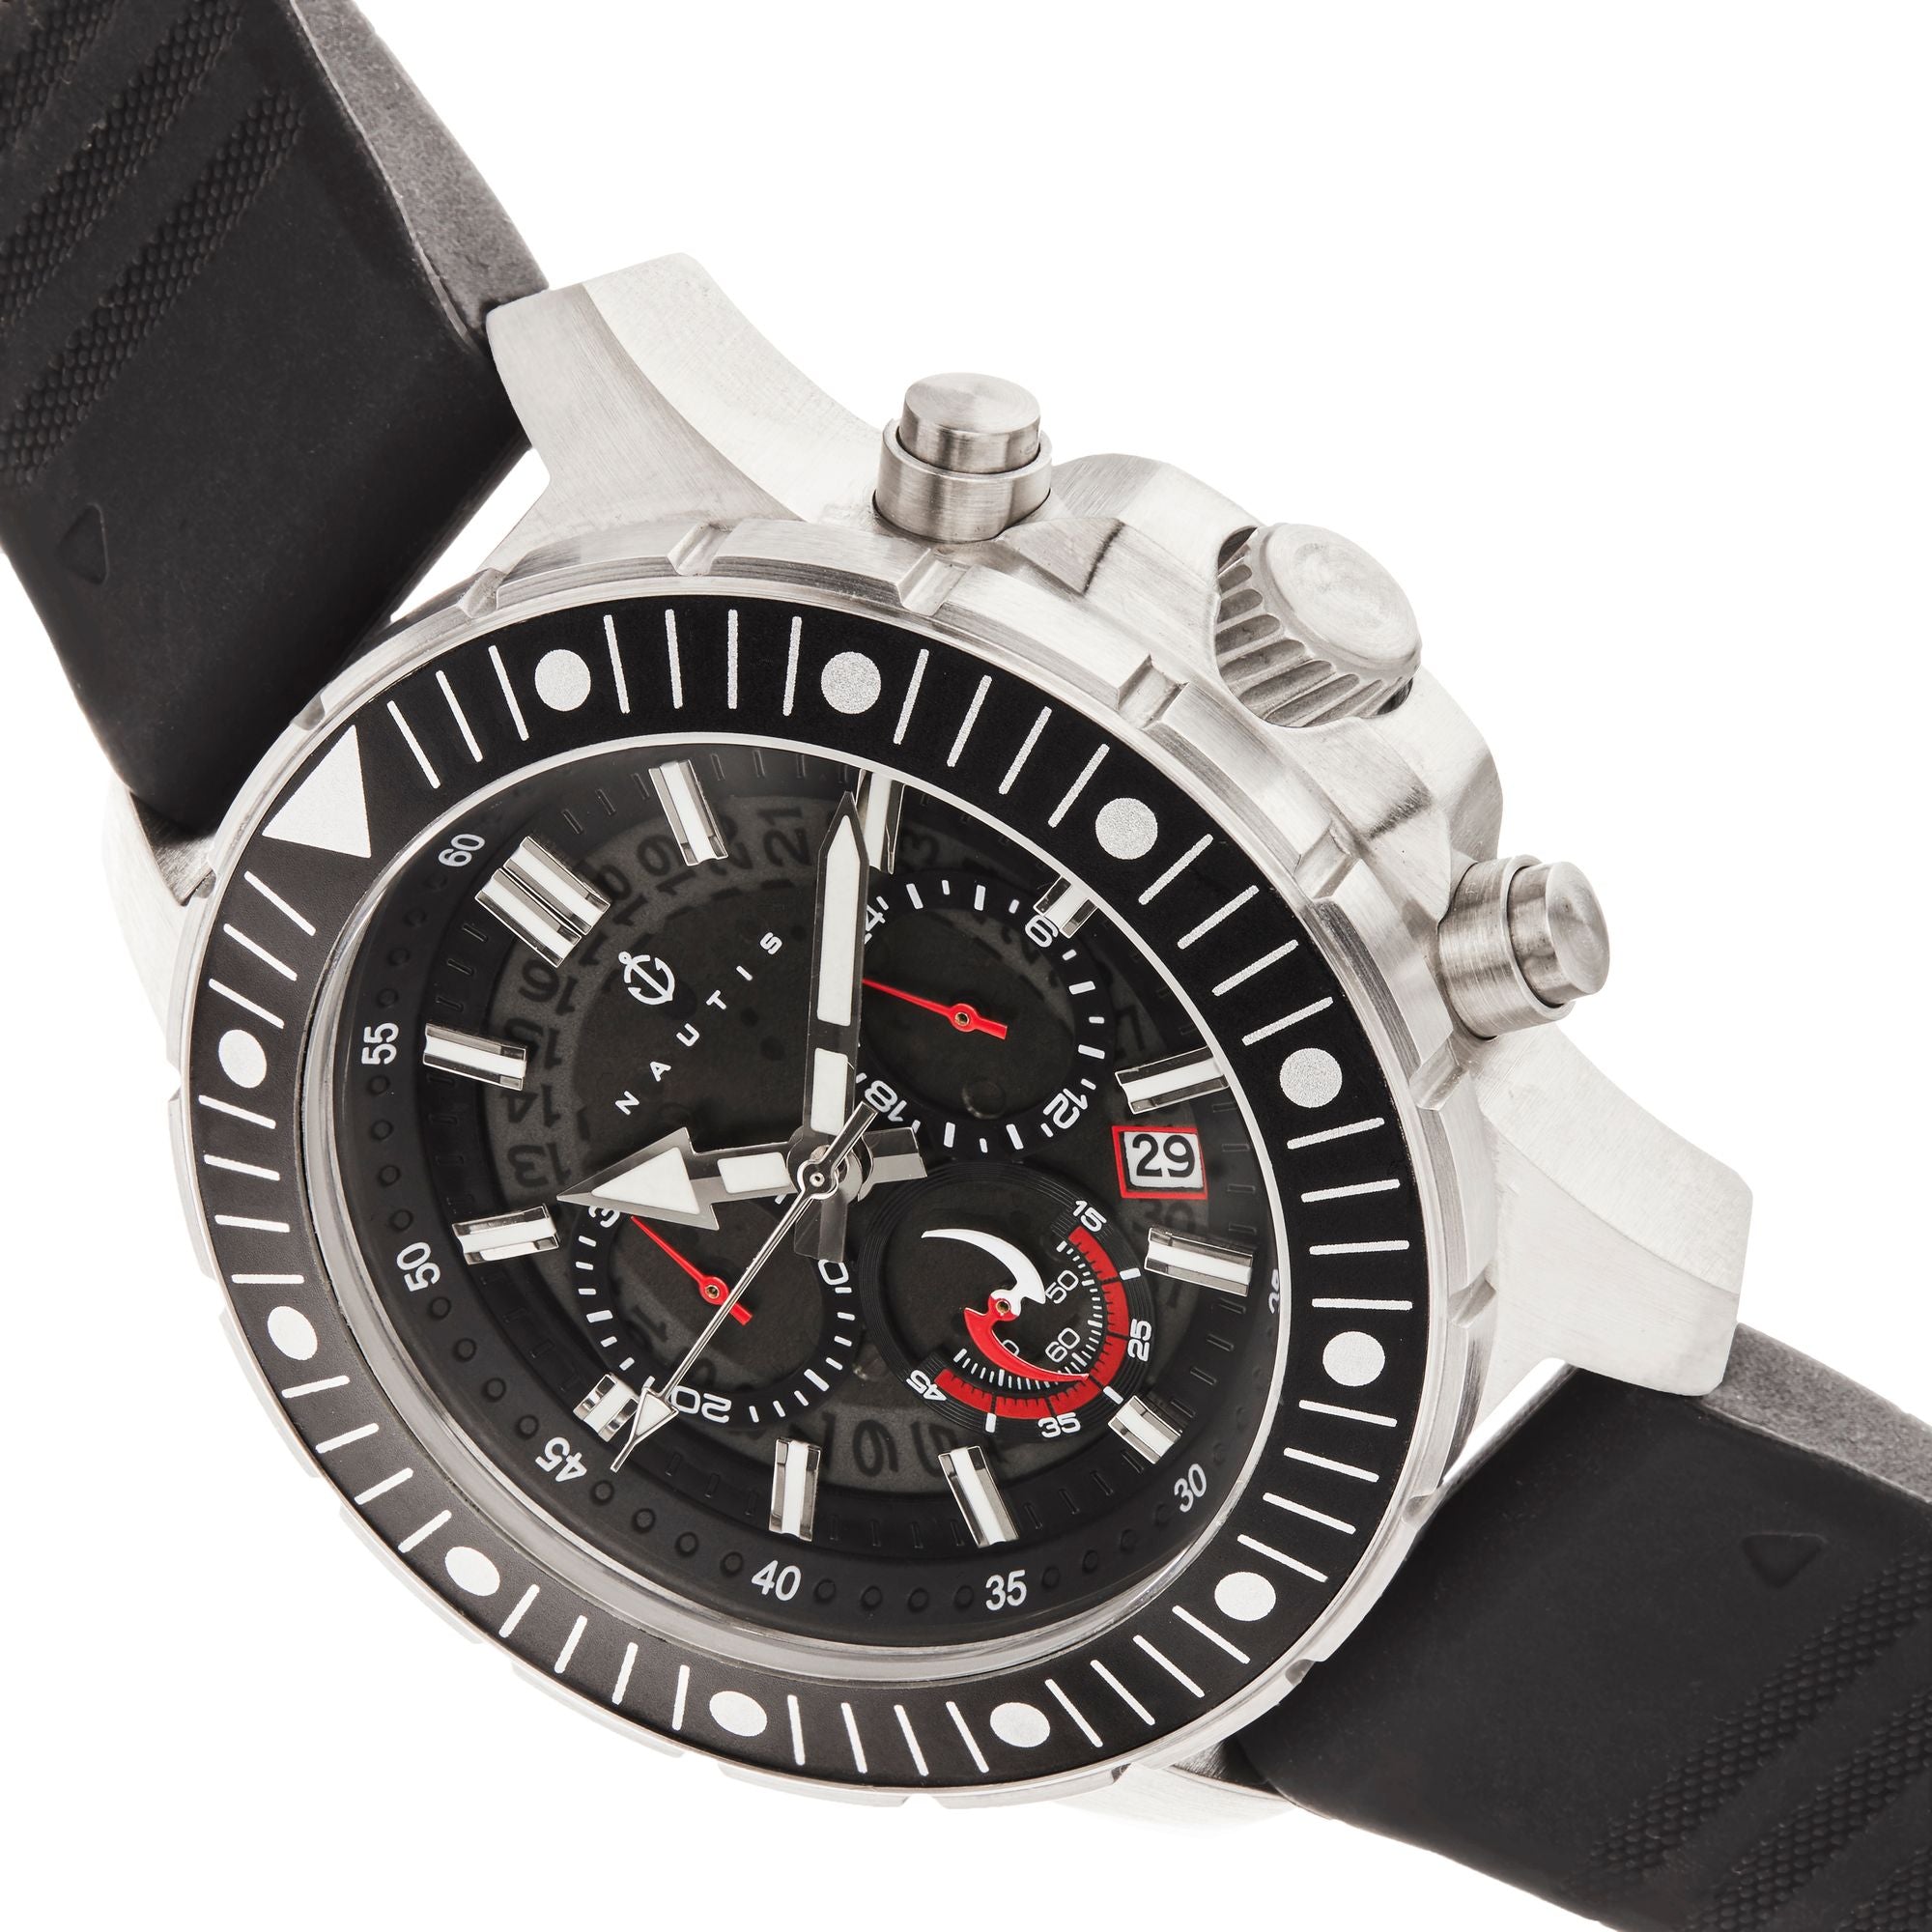 Nautis Caspian Chronograph Strap Watch w/Date - Black - 21227G-B